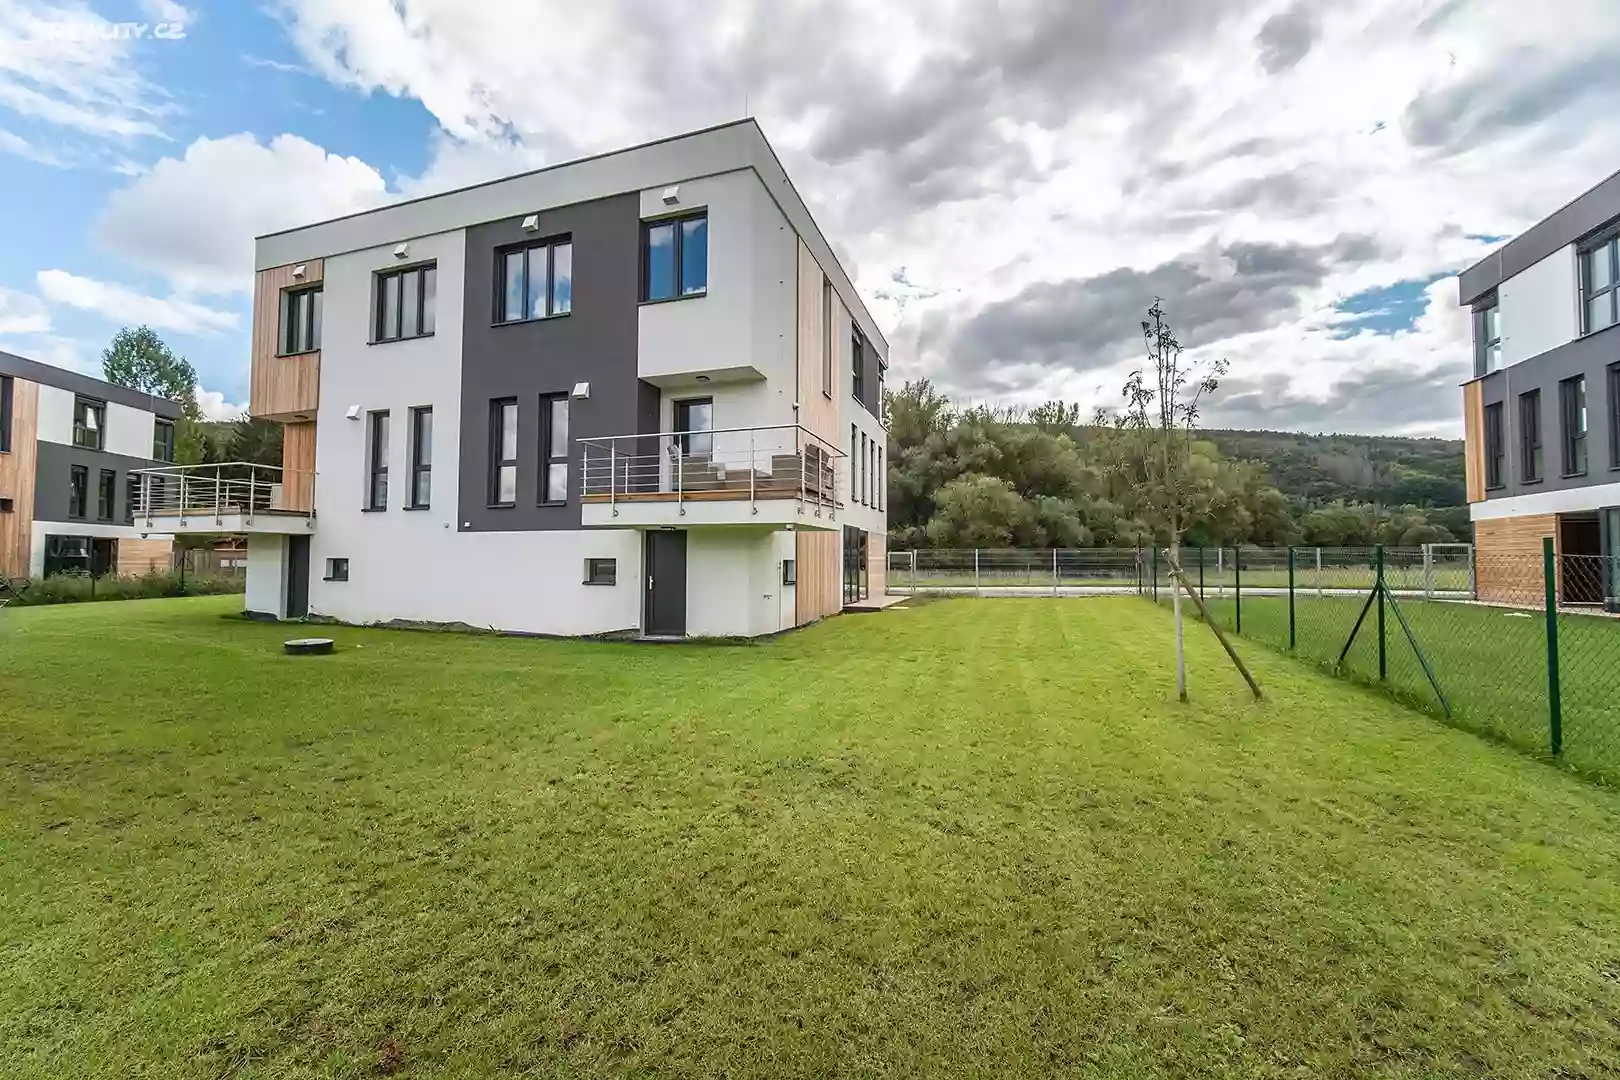 New building 2022: modern 5-room apartment in Rzevnica, Czech Republic